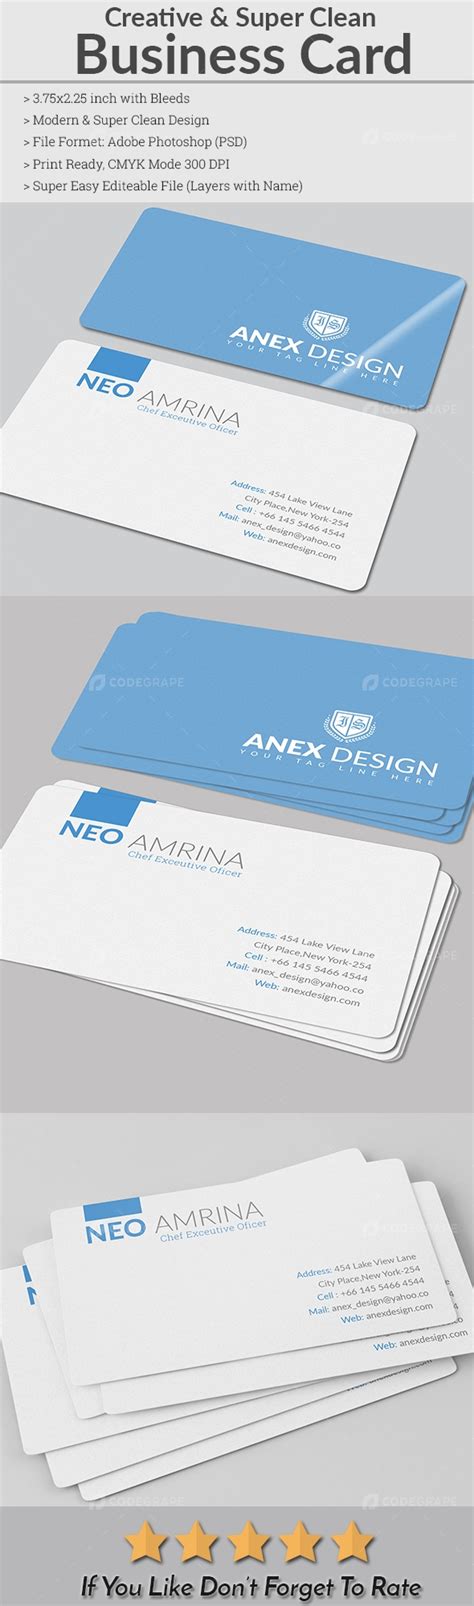 business card prints codegrape